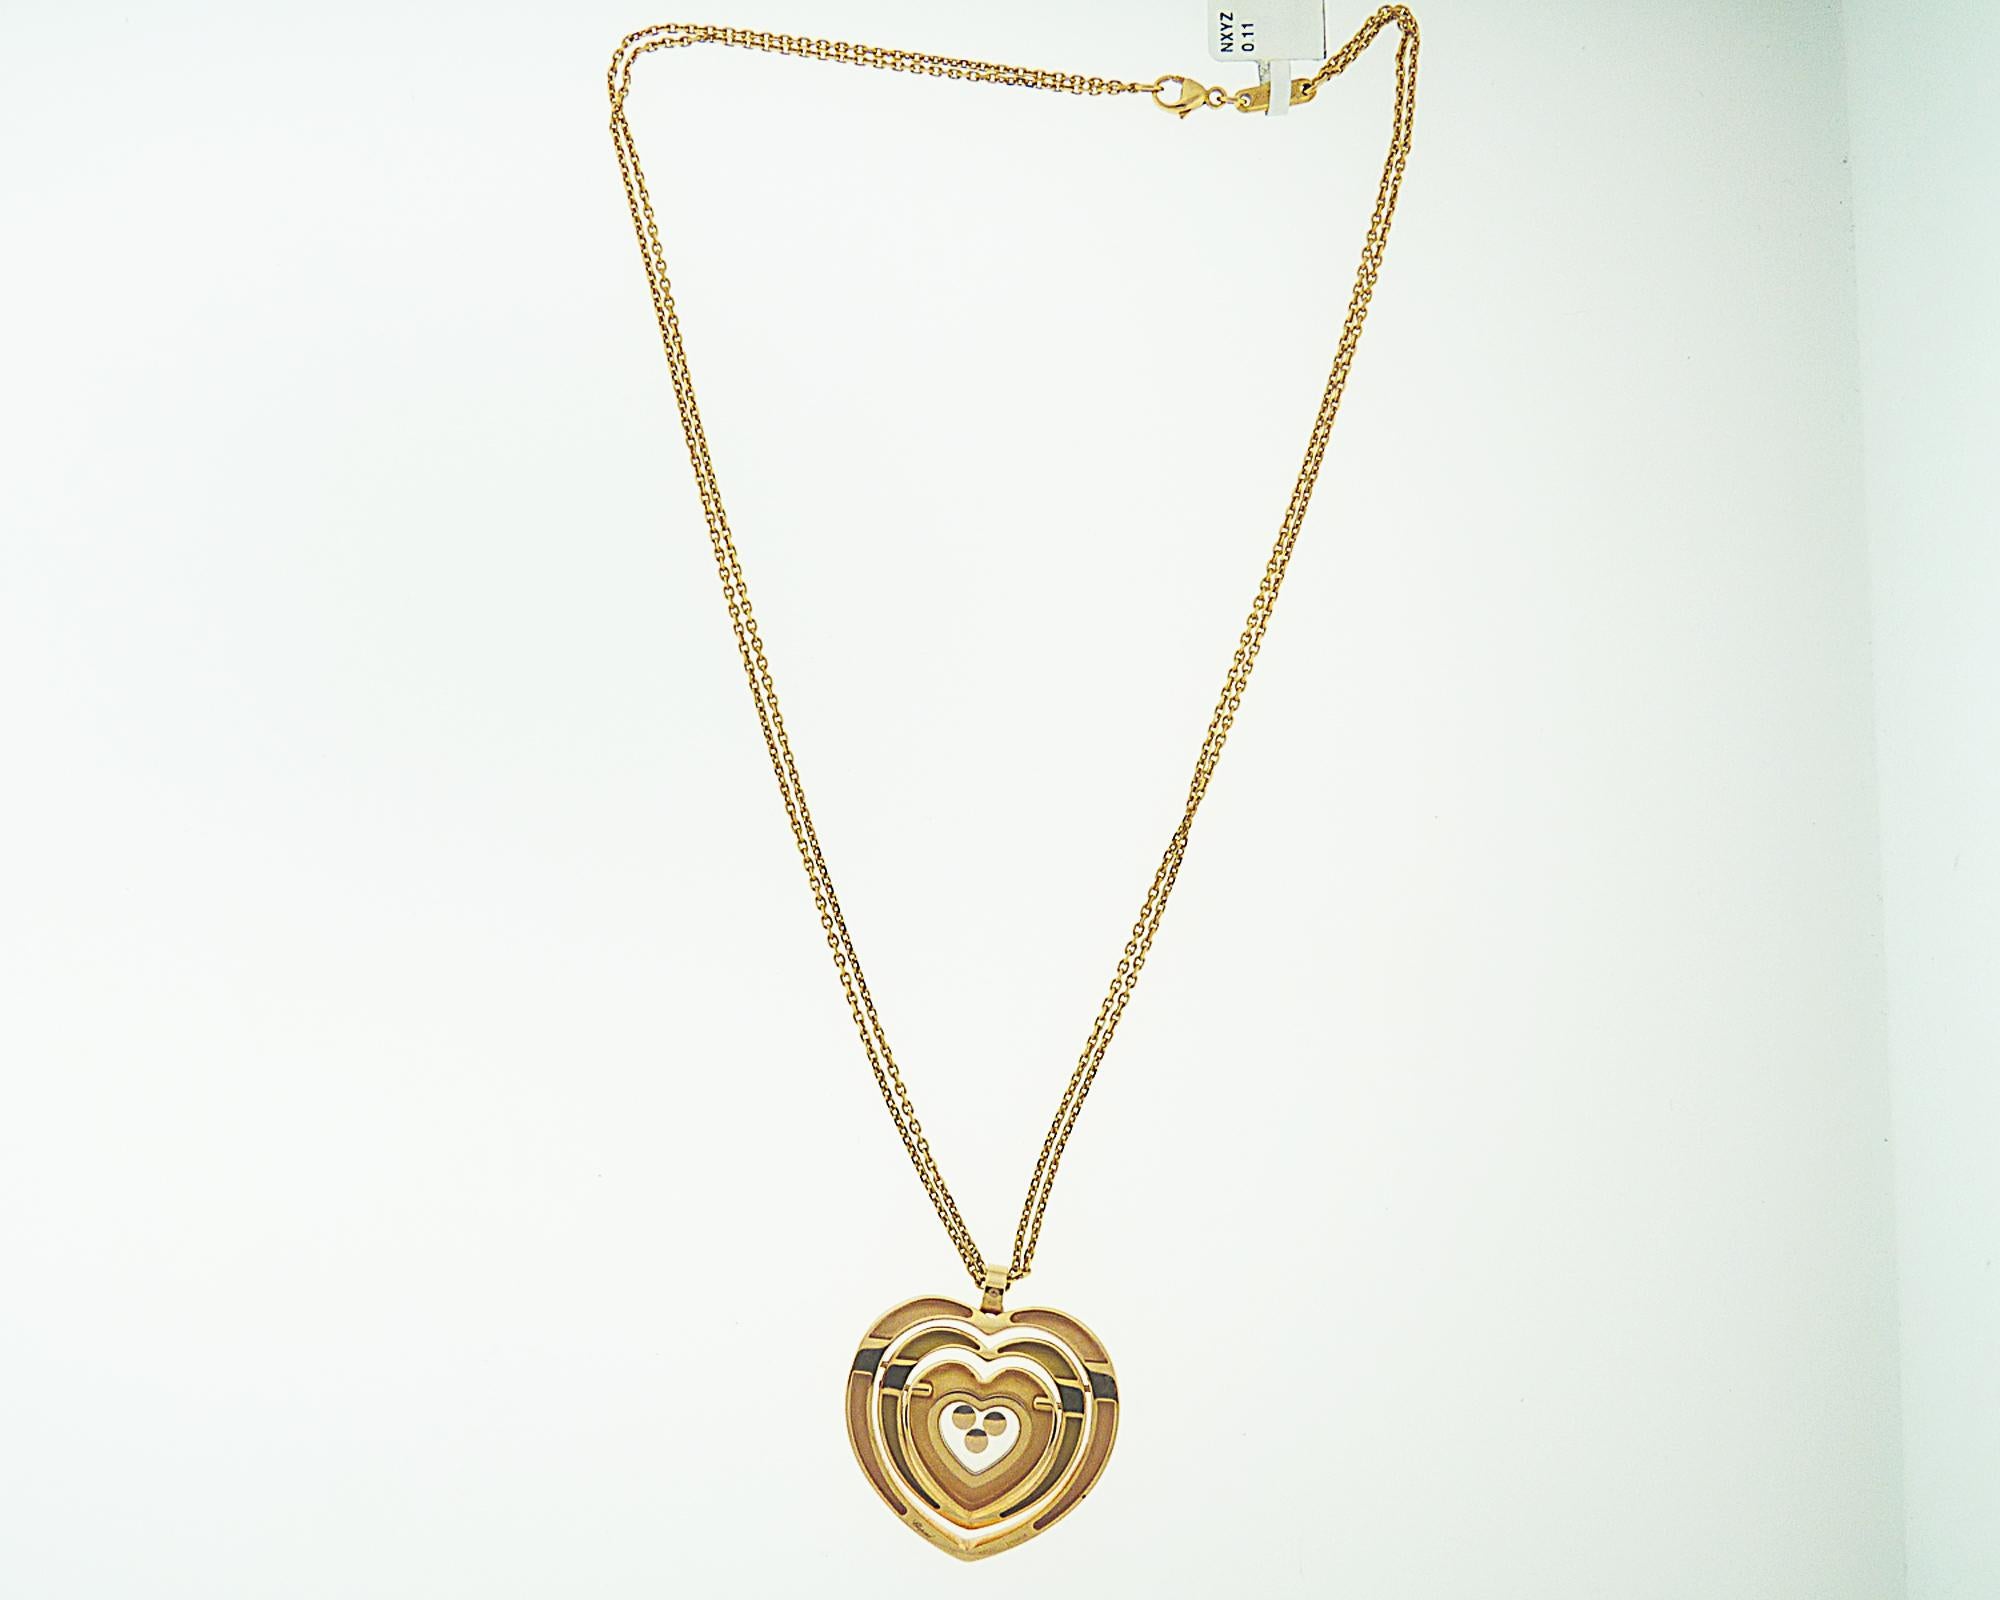 Contemporary Chopard Diamond Pendant Necklace in 18 Karat Yellow Gold